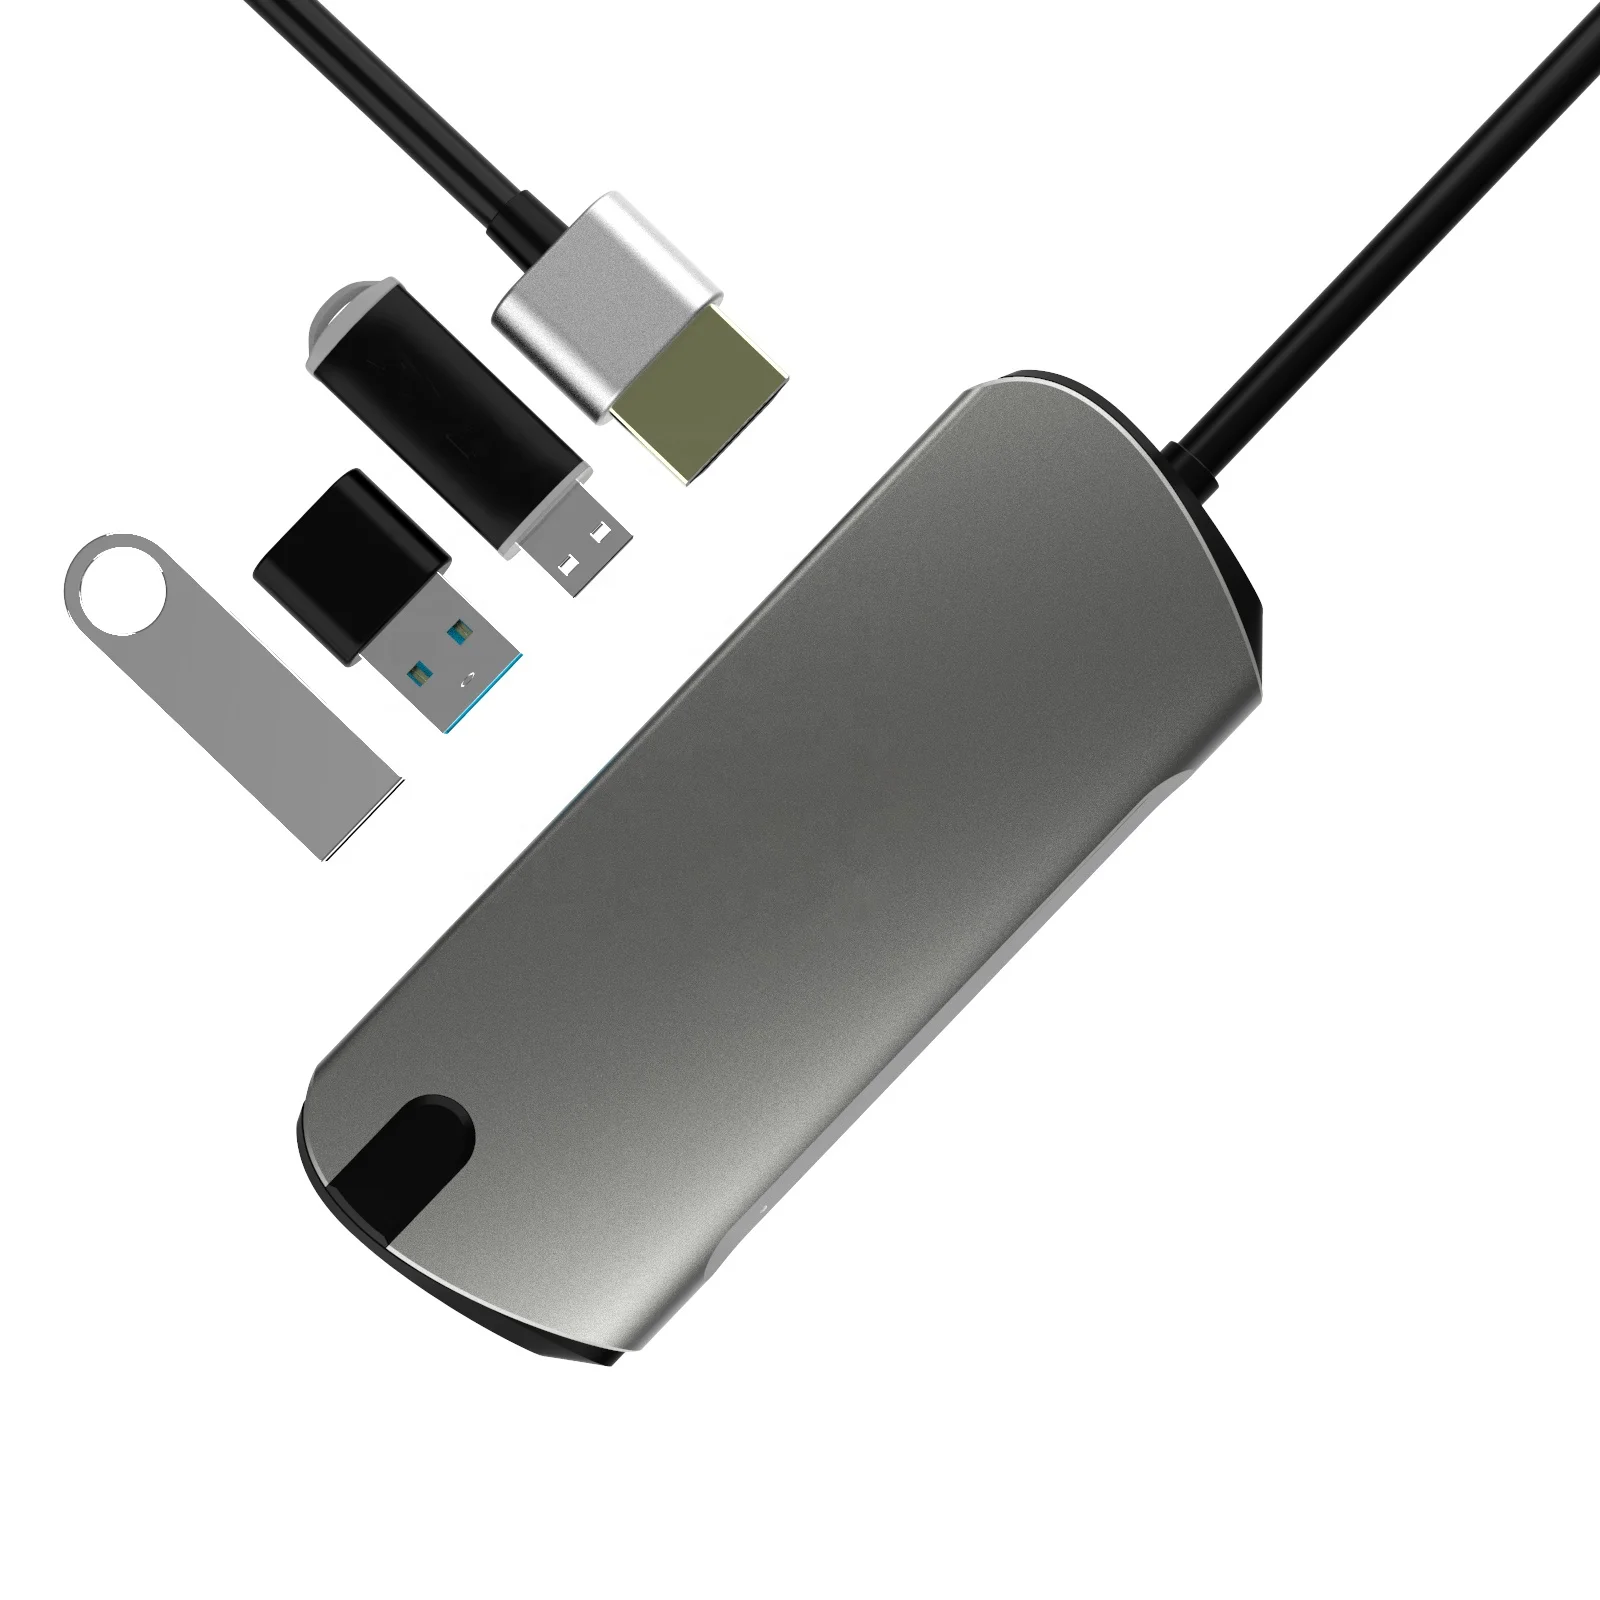 

BASIX 4 port hi-speed usb hub with 3 USB 3.0 Ports Adapter HUB for MacBook ChromeBook Pixel and More Laptops